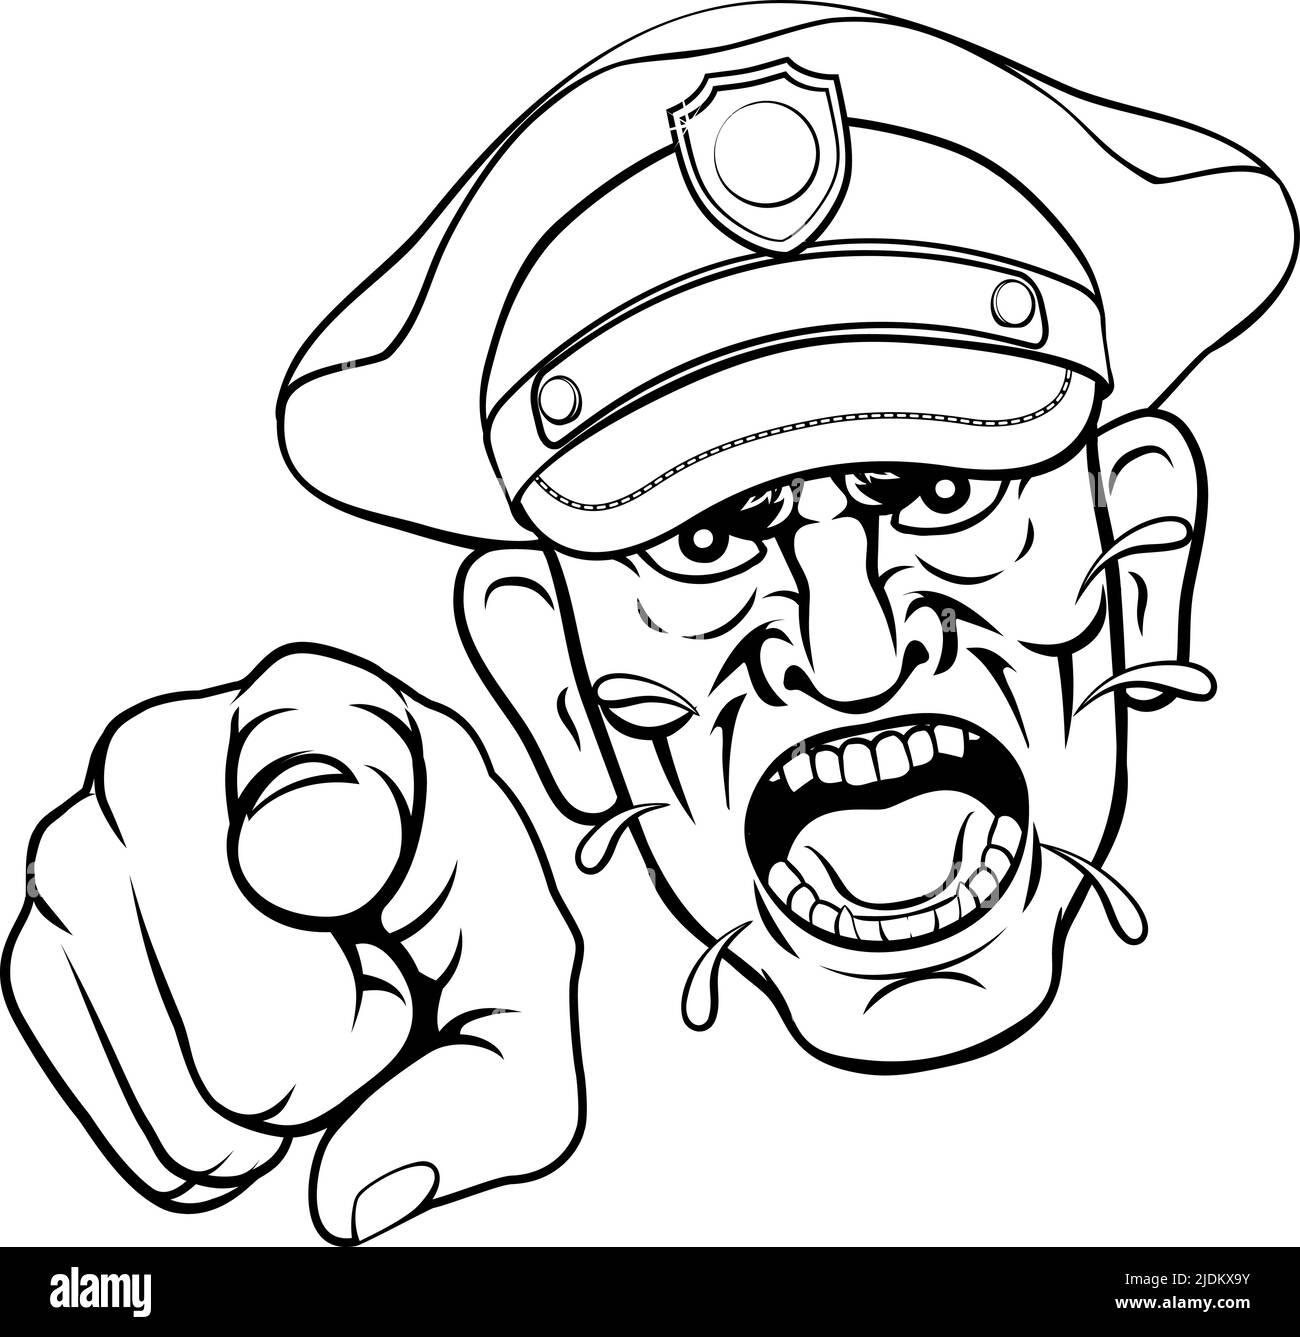 https://c8.alamy.com/comp/2JDKX9Y/angry-policeman-police-officer-cartoon-2JDKX9Y.jpg